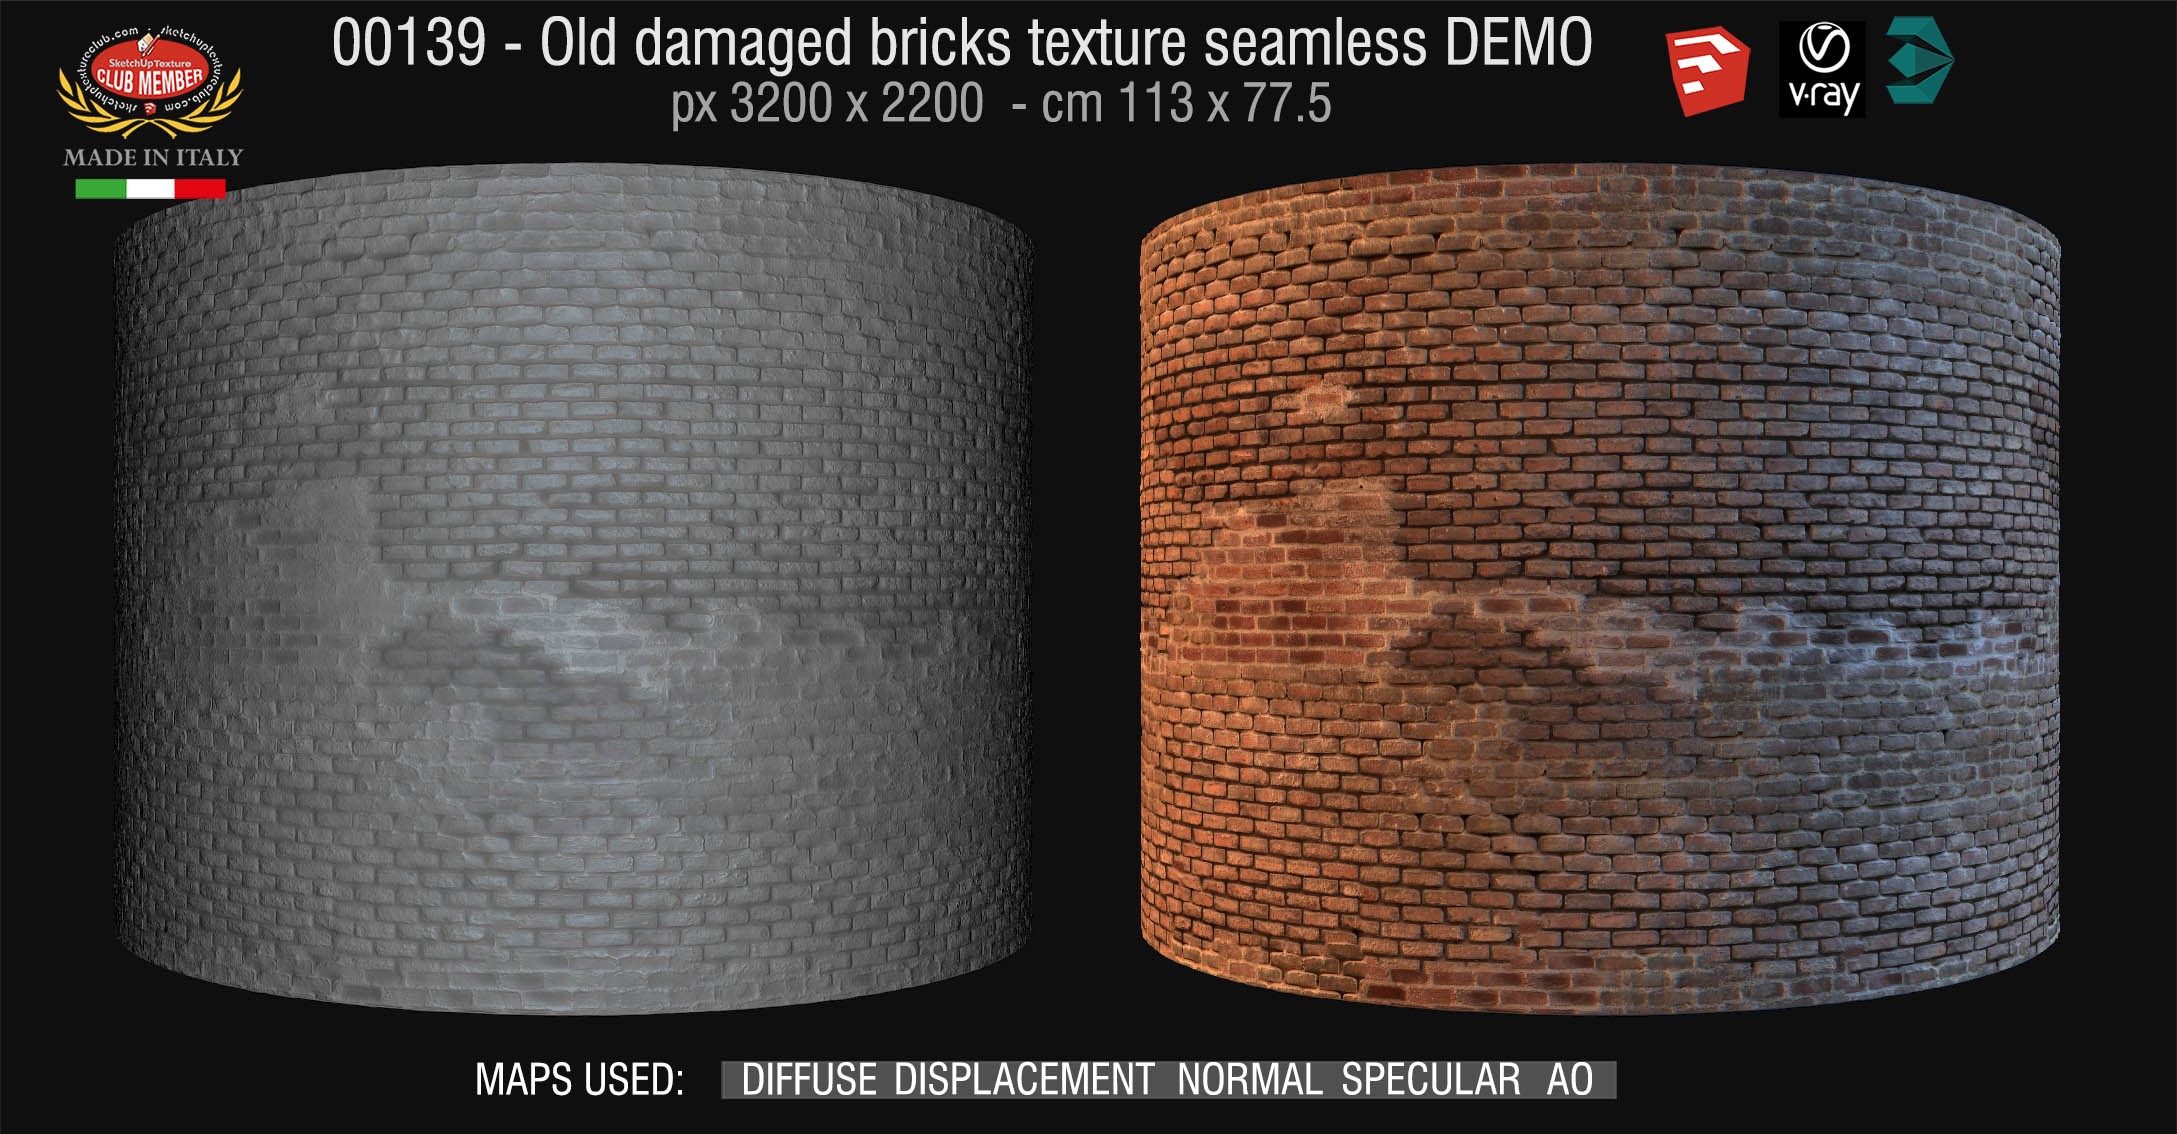 00139 HR Damaged bricks texture seamless + maps DEMO